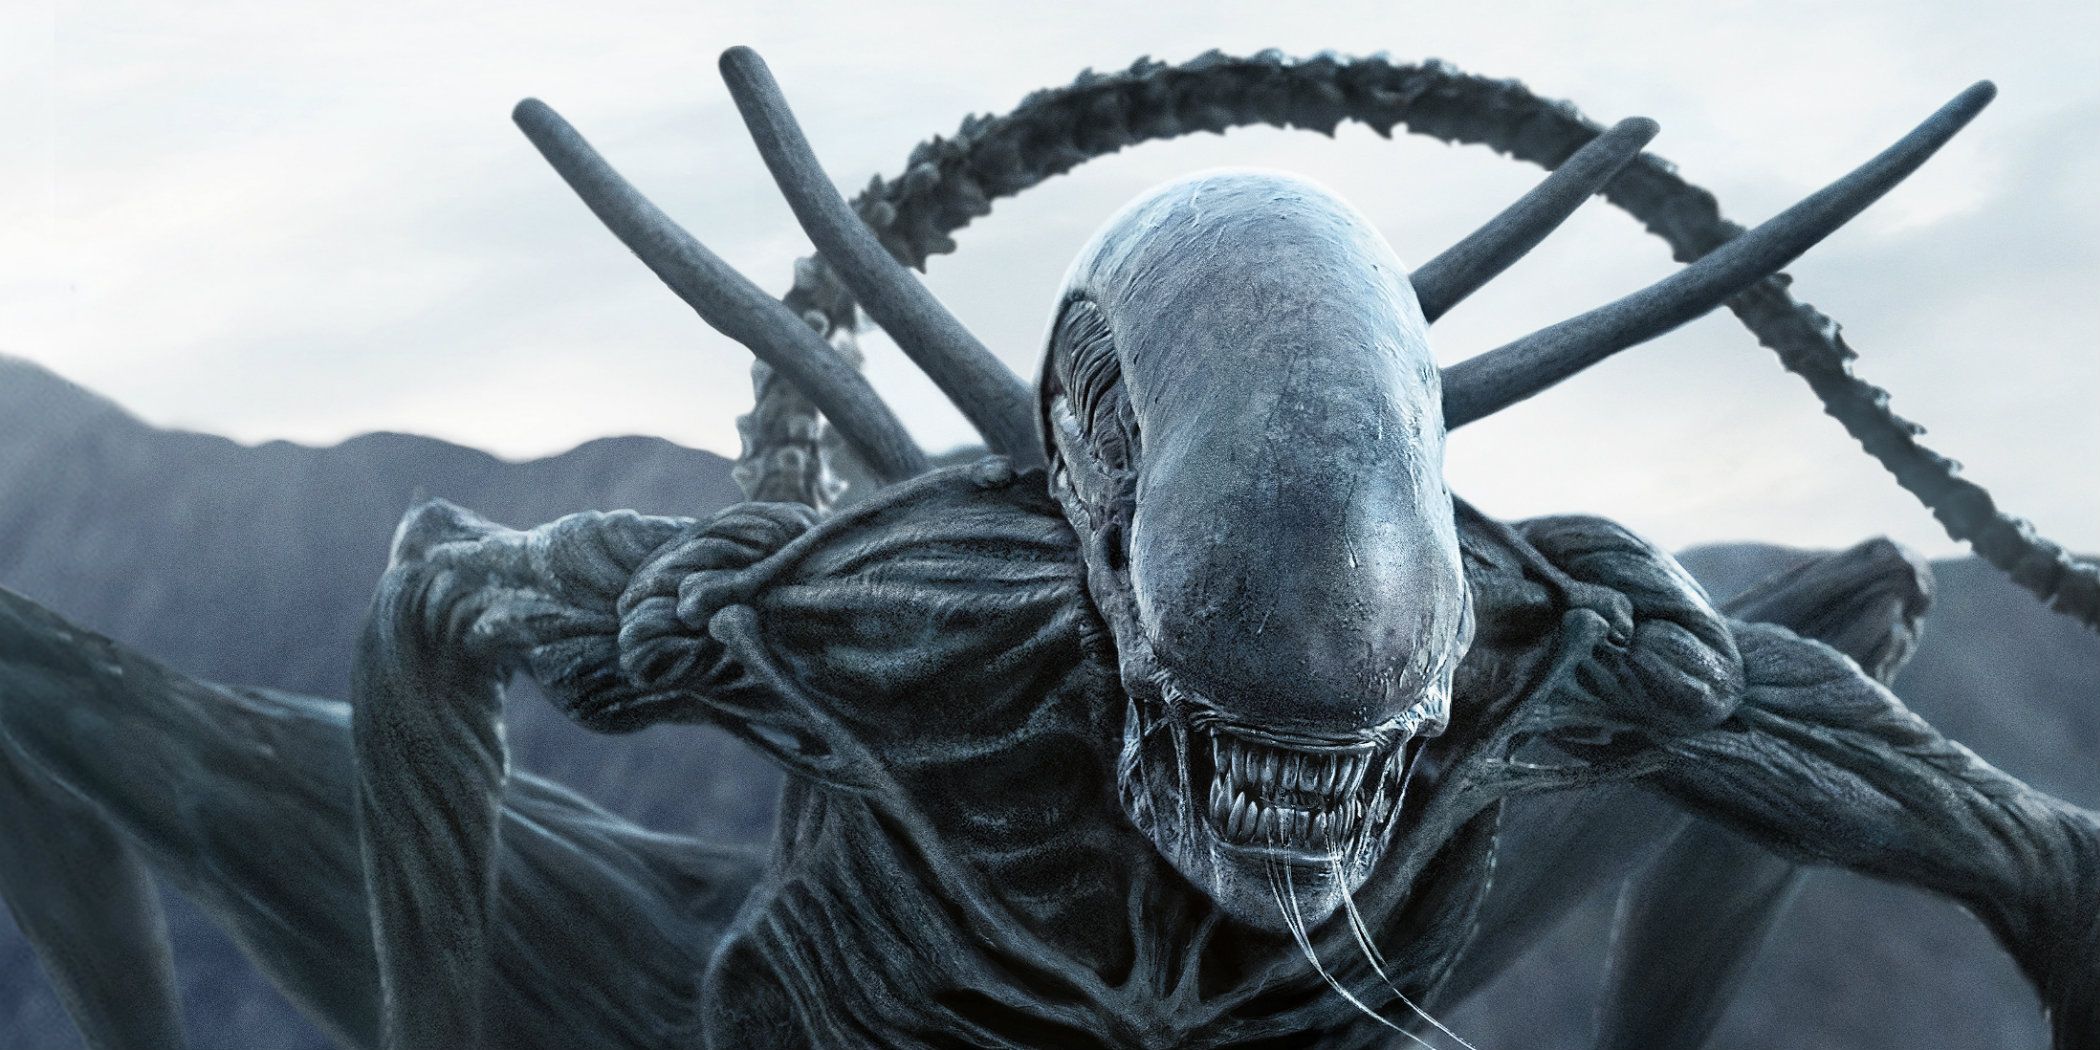 A xenomorph attacks humans in Alien: Covenant